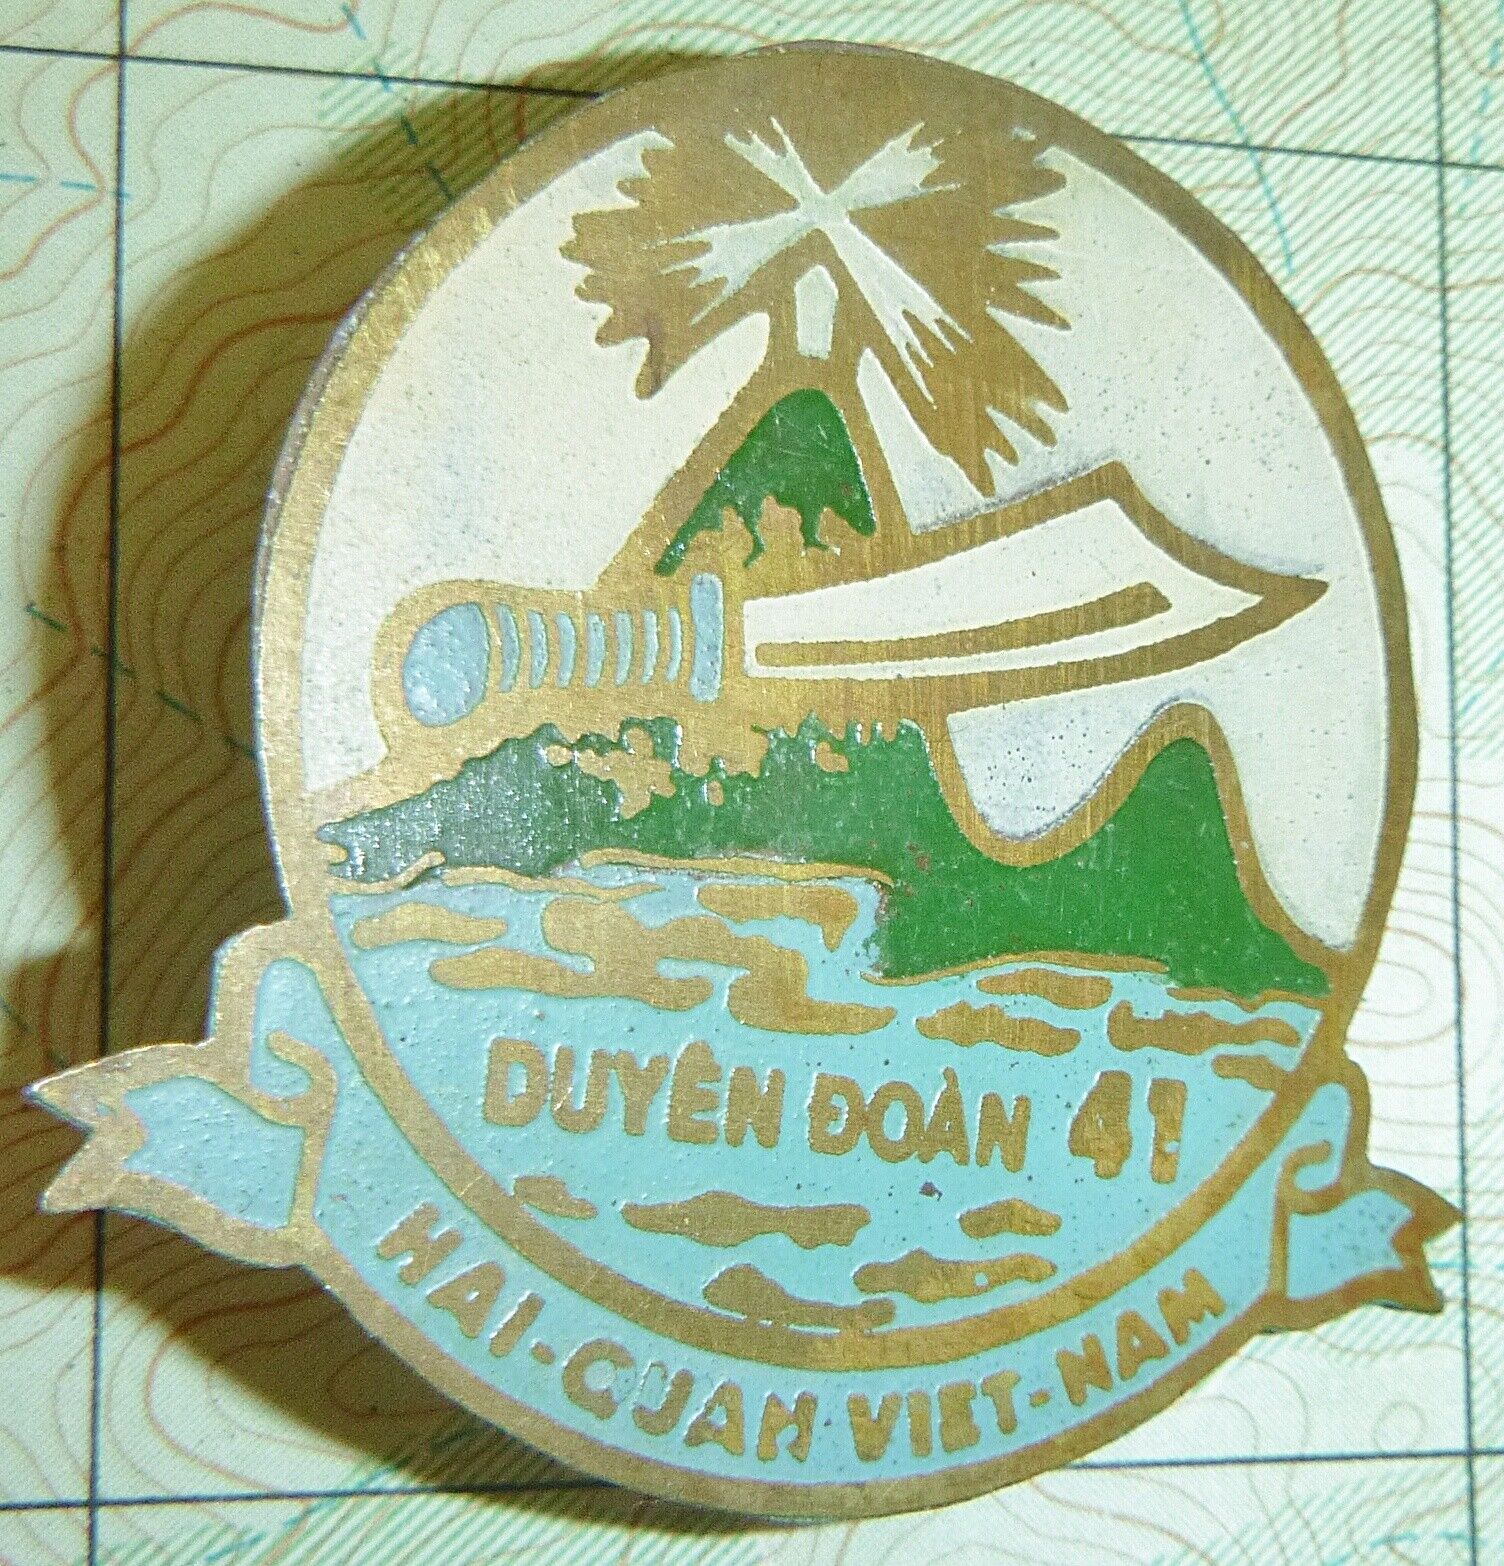 COASTAL DIVISION 41 - Beercan Badge - CA MAU - RVN NAVY - Vietnam War - S.150